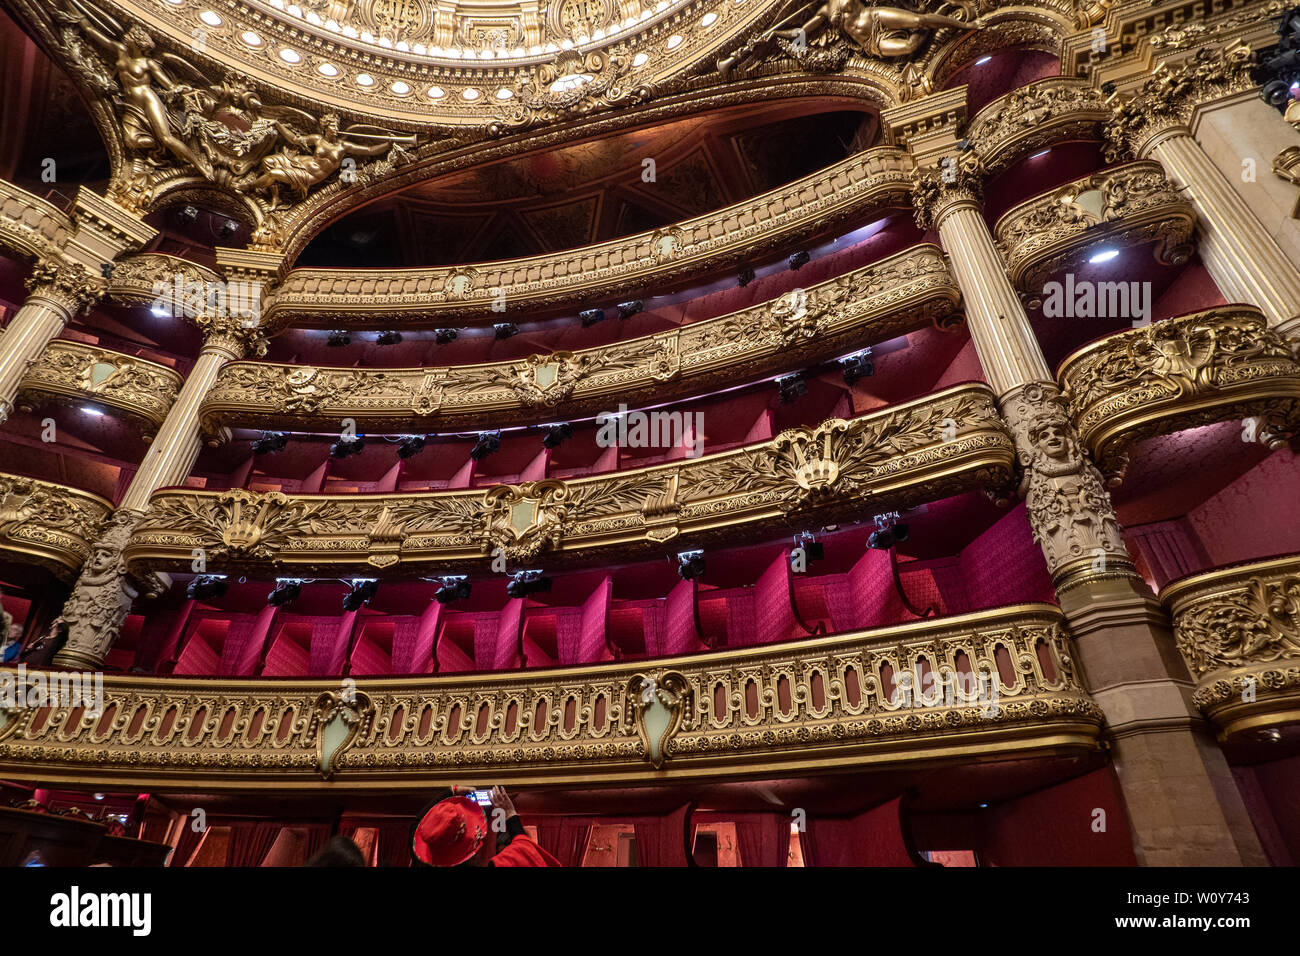 Palais Garnier - Paris Opera House - auditorium interior architecture and decoration. Balcony details. Paris, France - May 14, 2019. Stock Photo